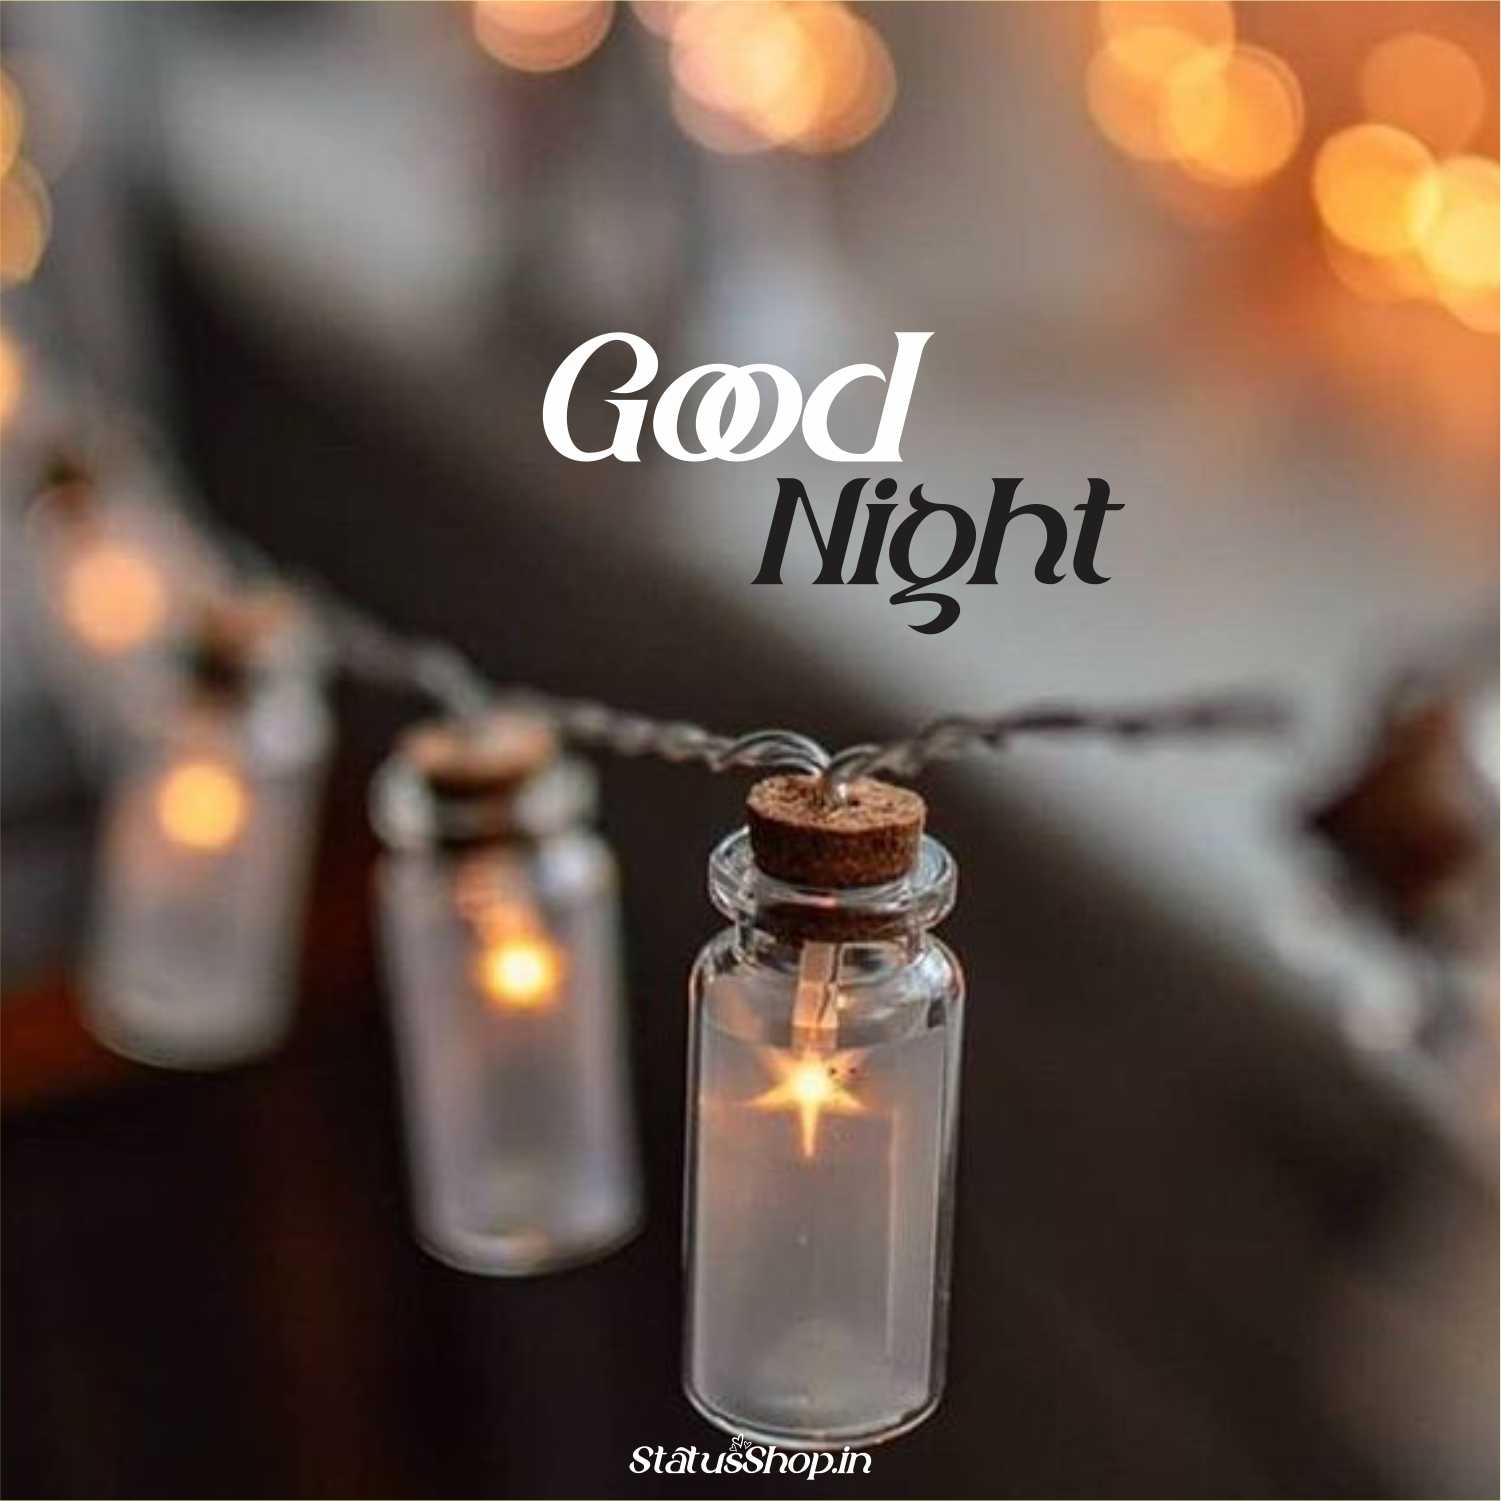 Images-Good-Night